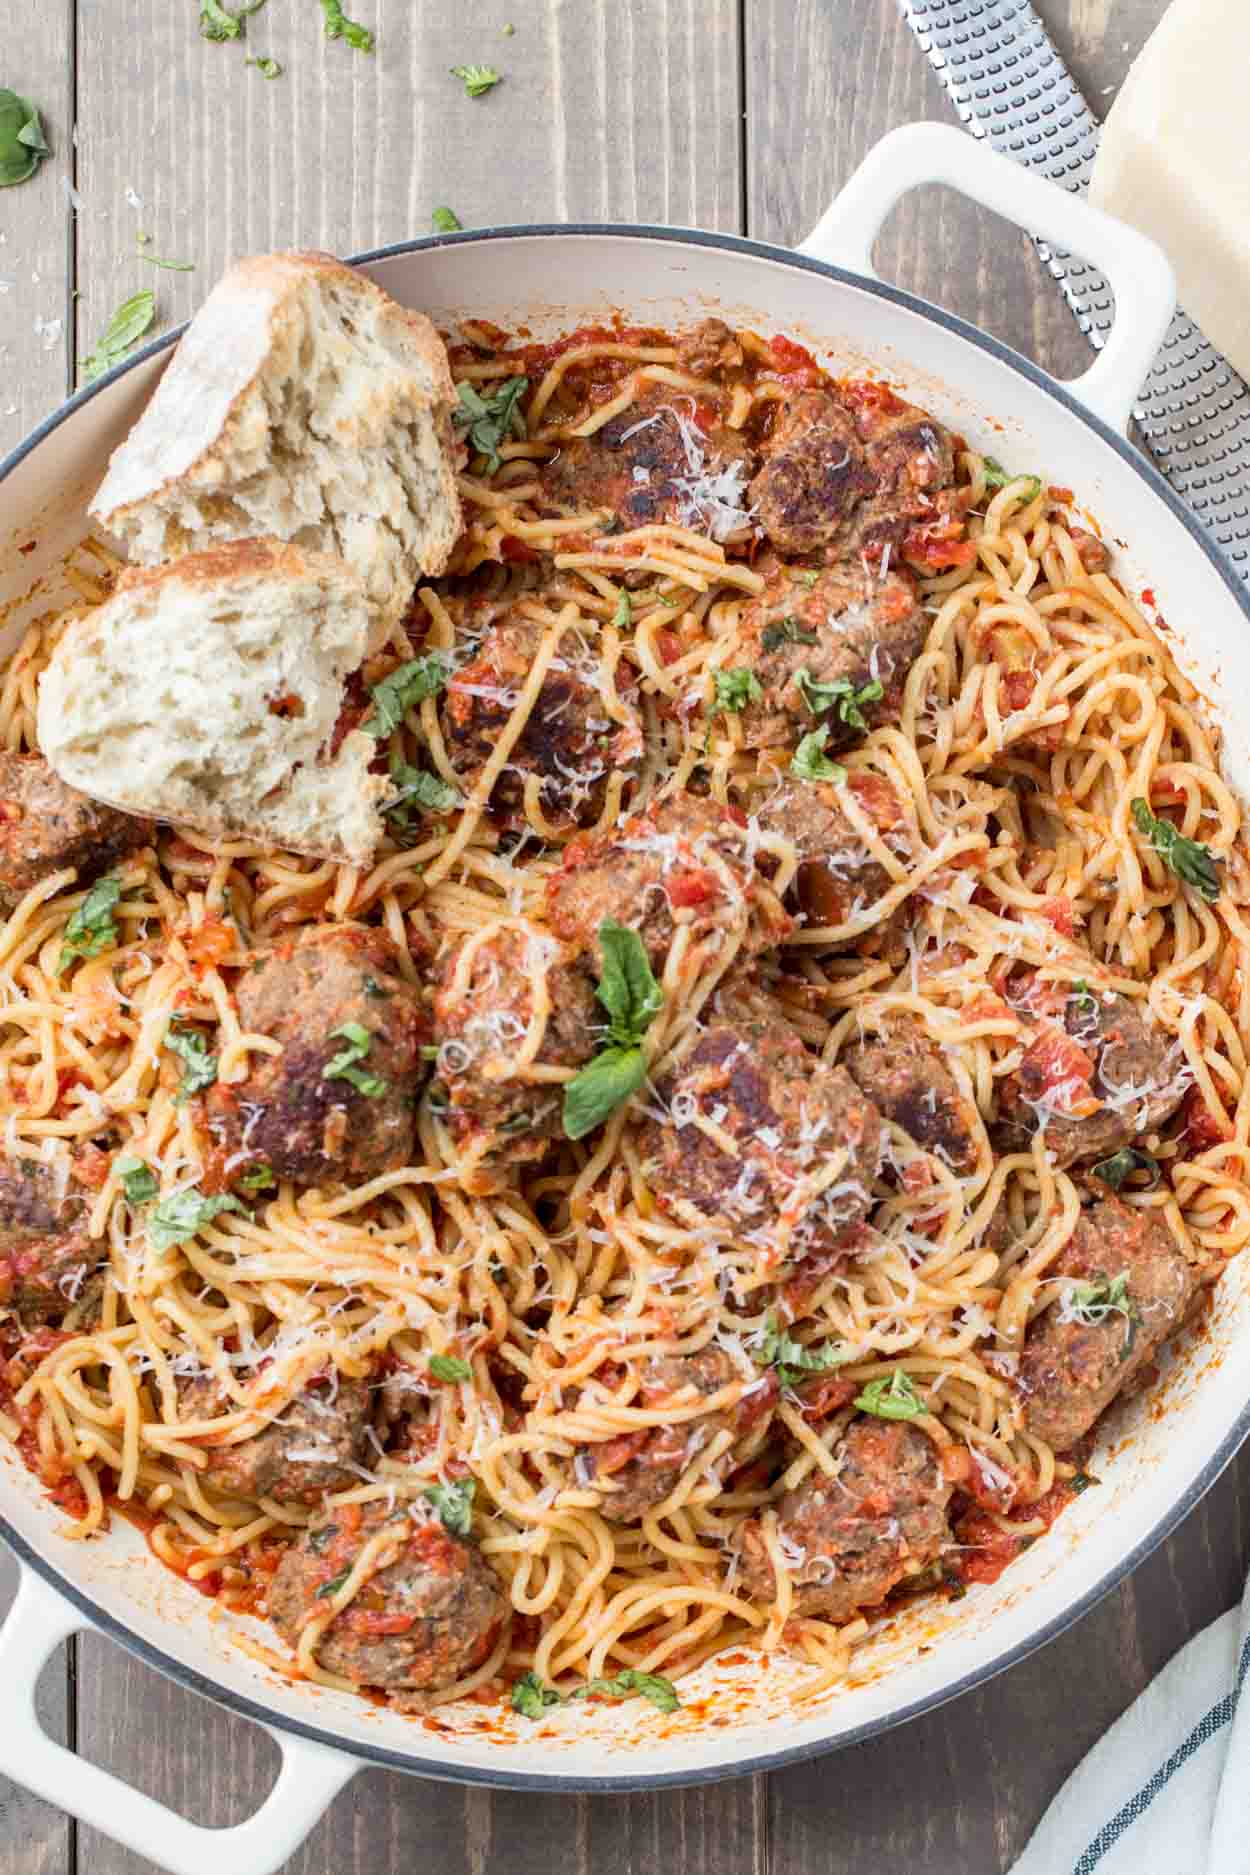 Spaghetti and meatballs recipe made with homemade meatballs.